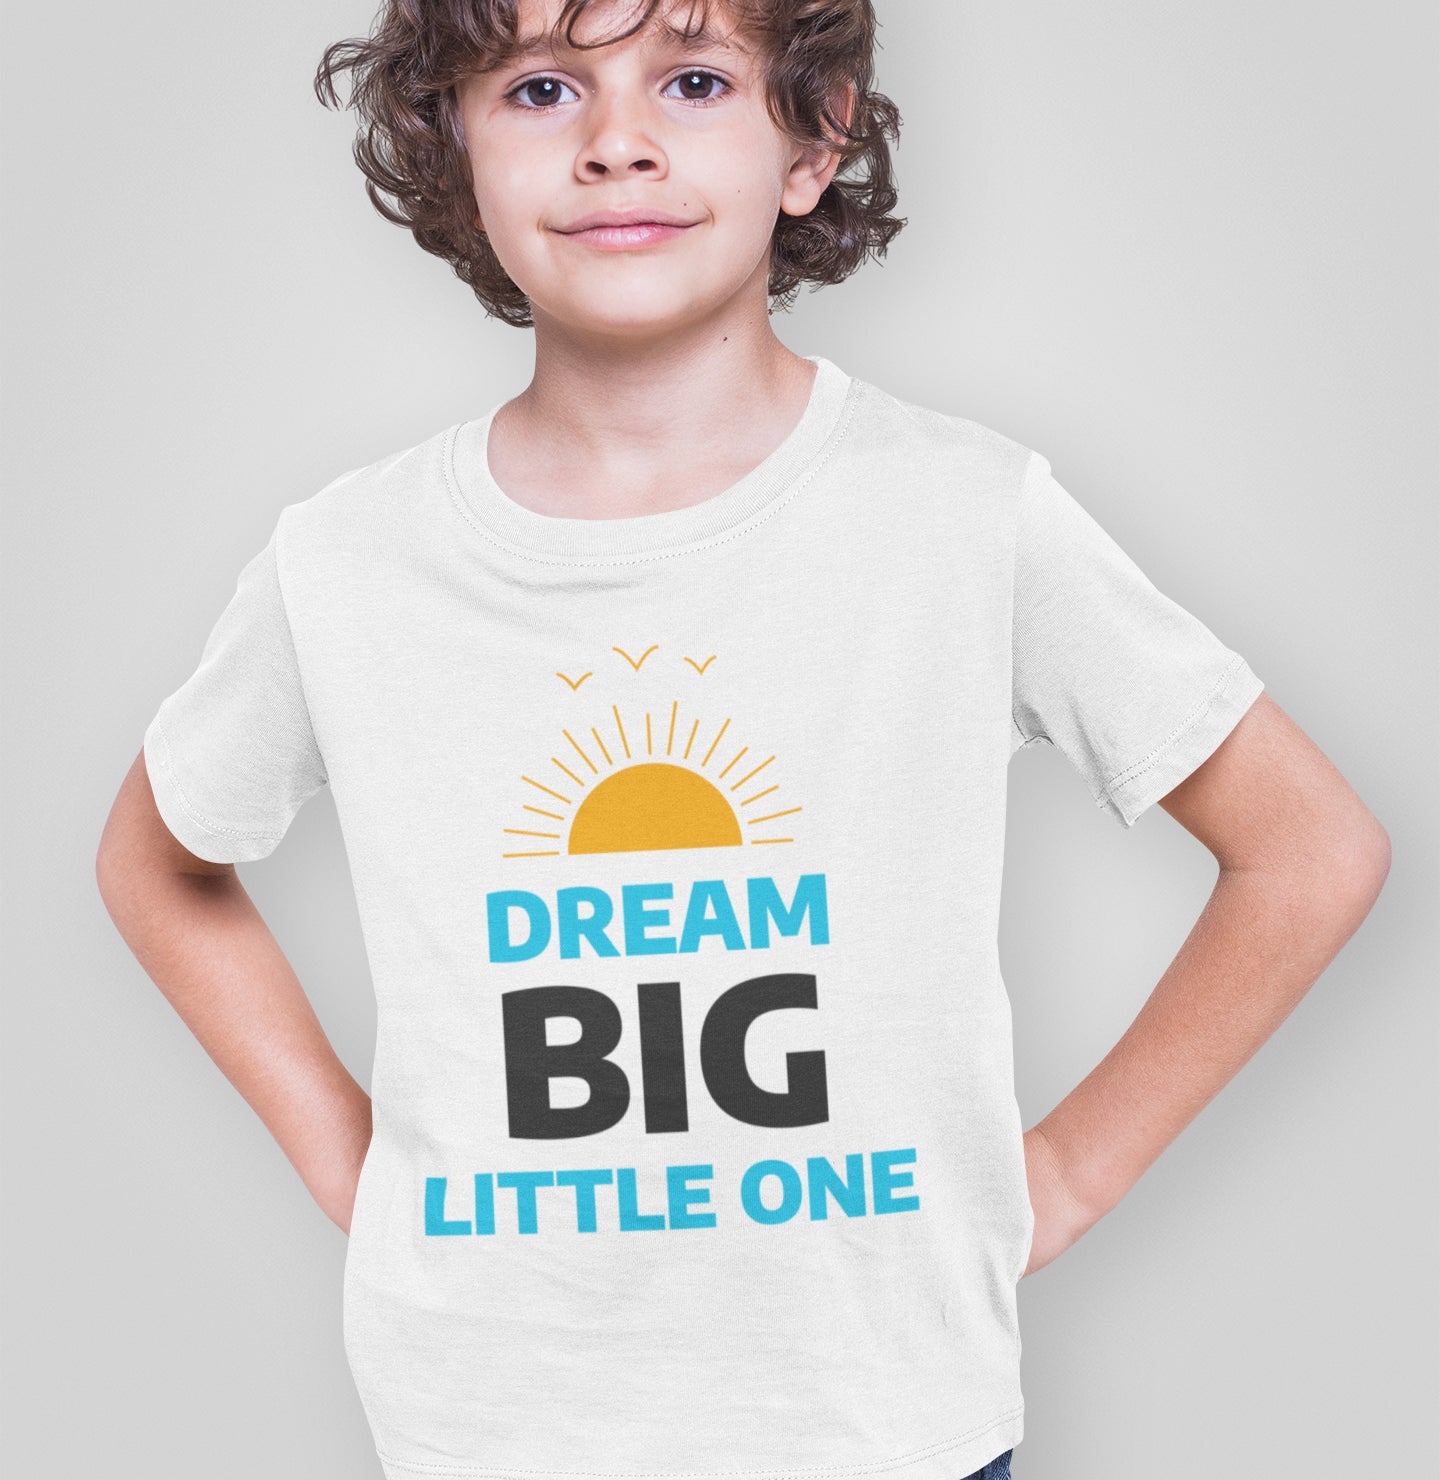 Kids Boys Dream Big T-Shirt